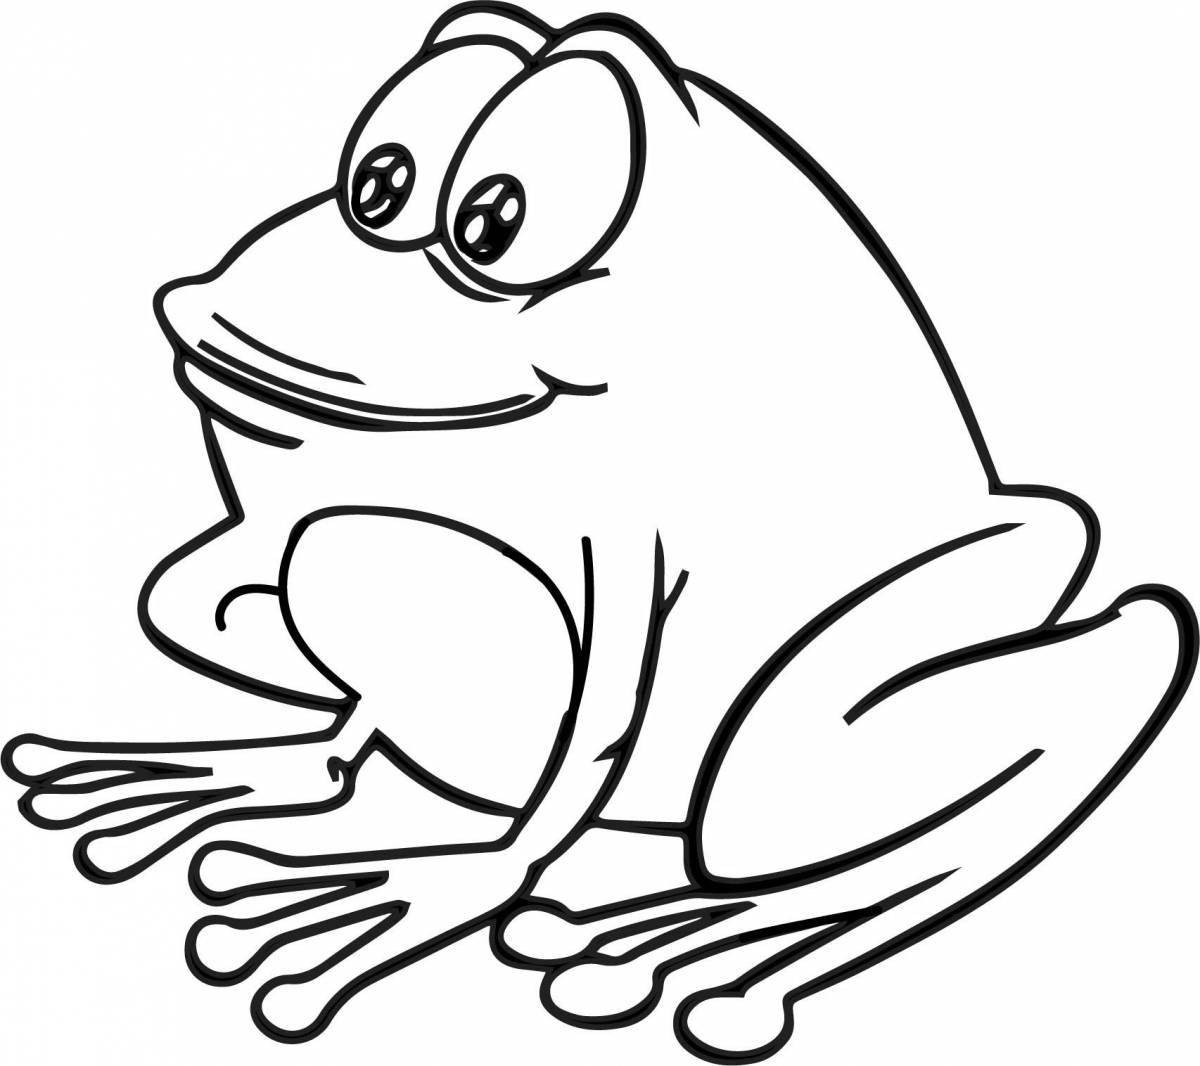 Live cartoon frog coloring book